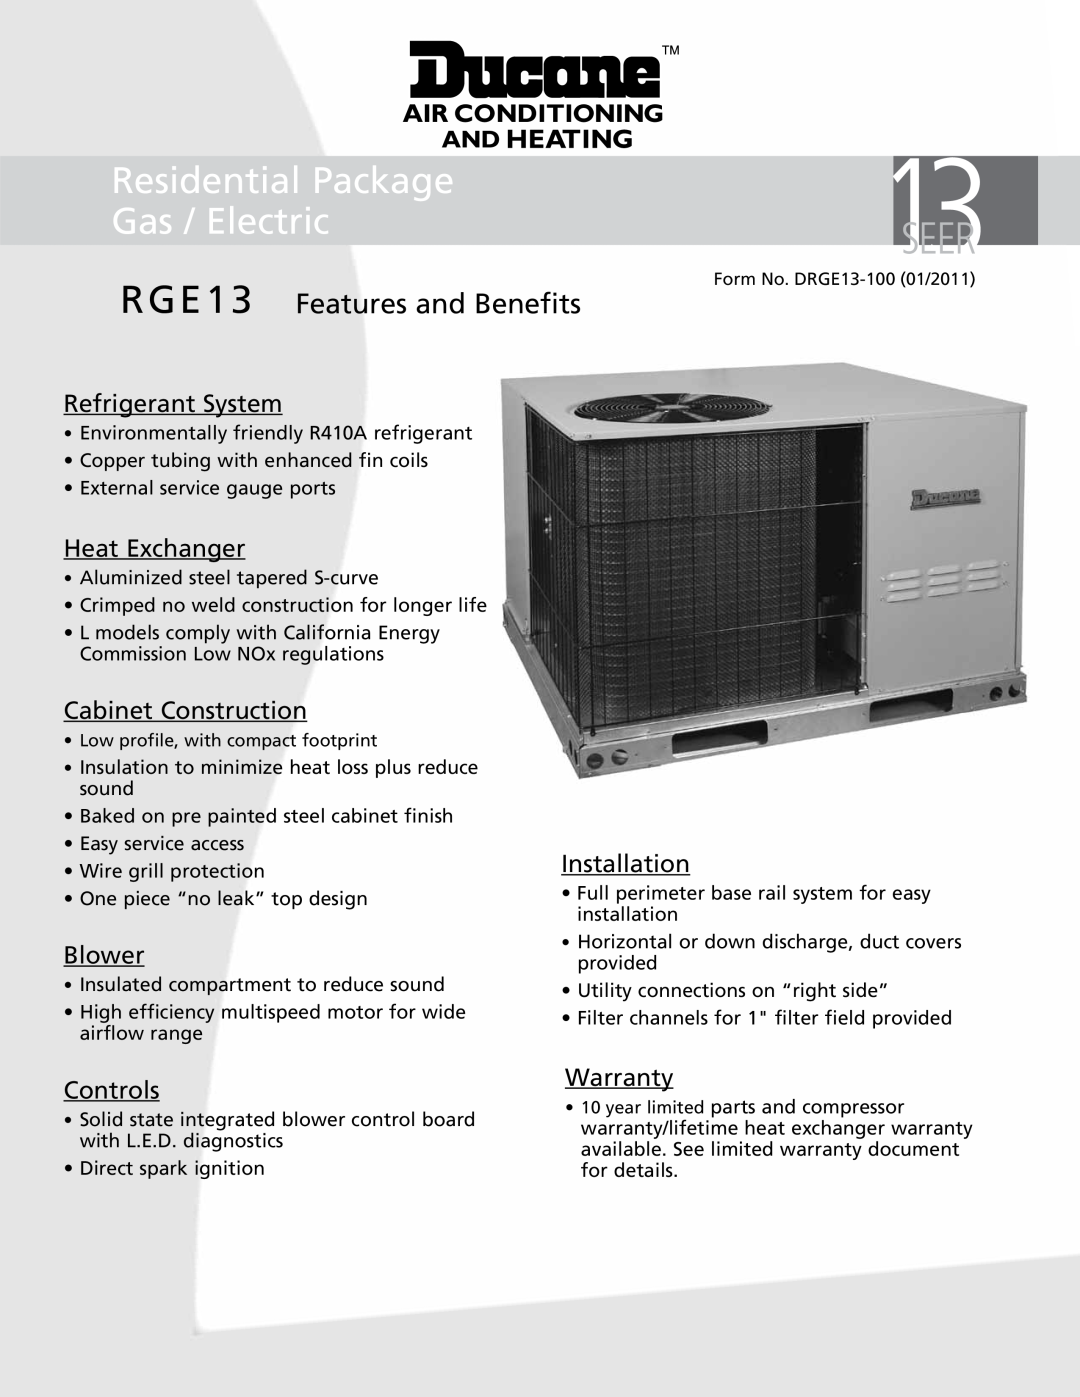 Ducane RGE13 warranty Refrigerant System, Heat Exchanger, Cabinet Construction, Blower, Installation, Controls, Warranty 